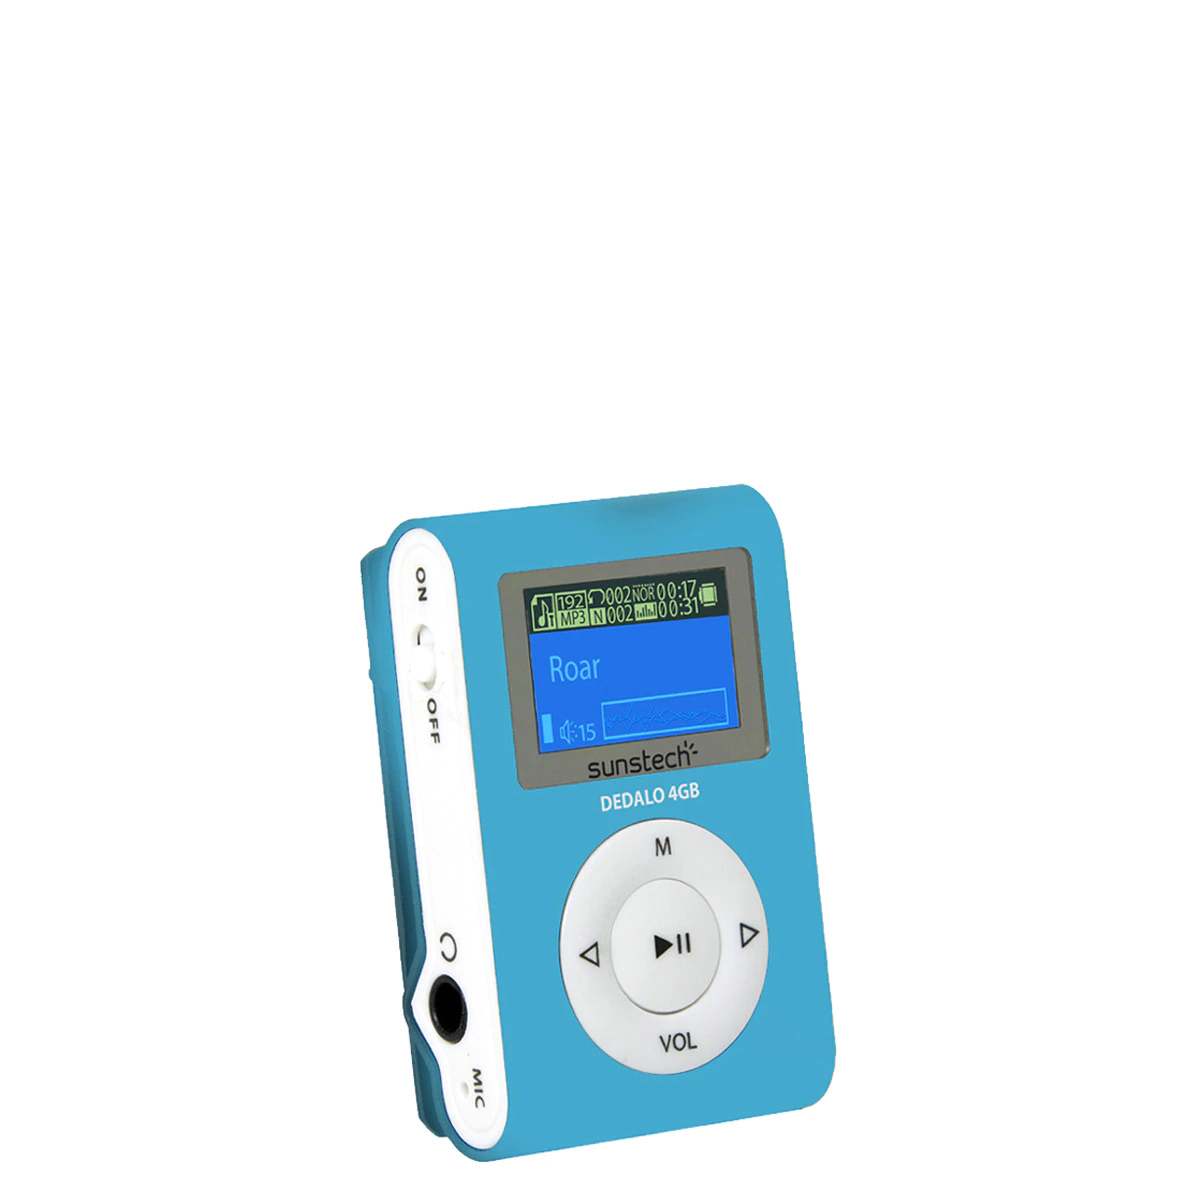 Reproductor MP3 Sunstech Dedalo III Azul de 4 GB con radio FM